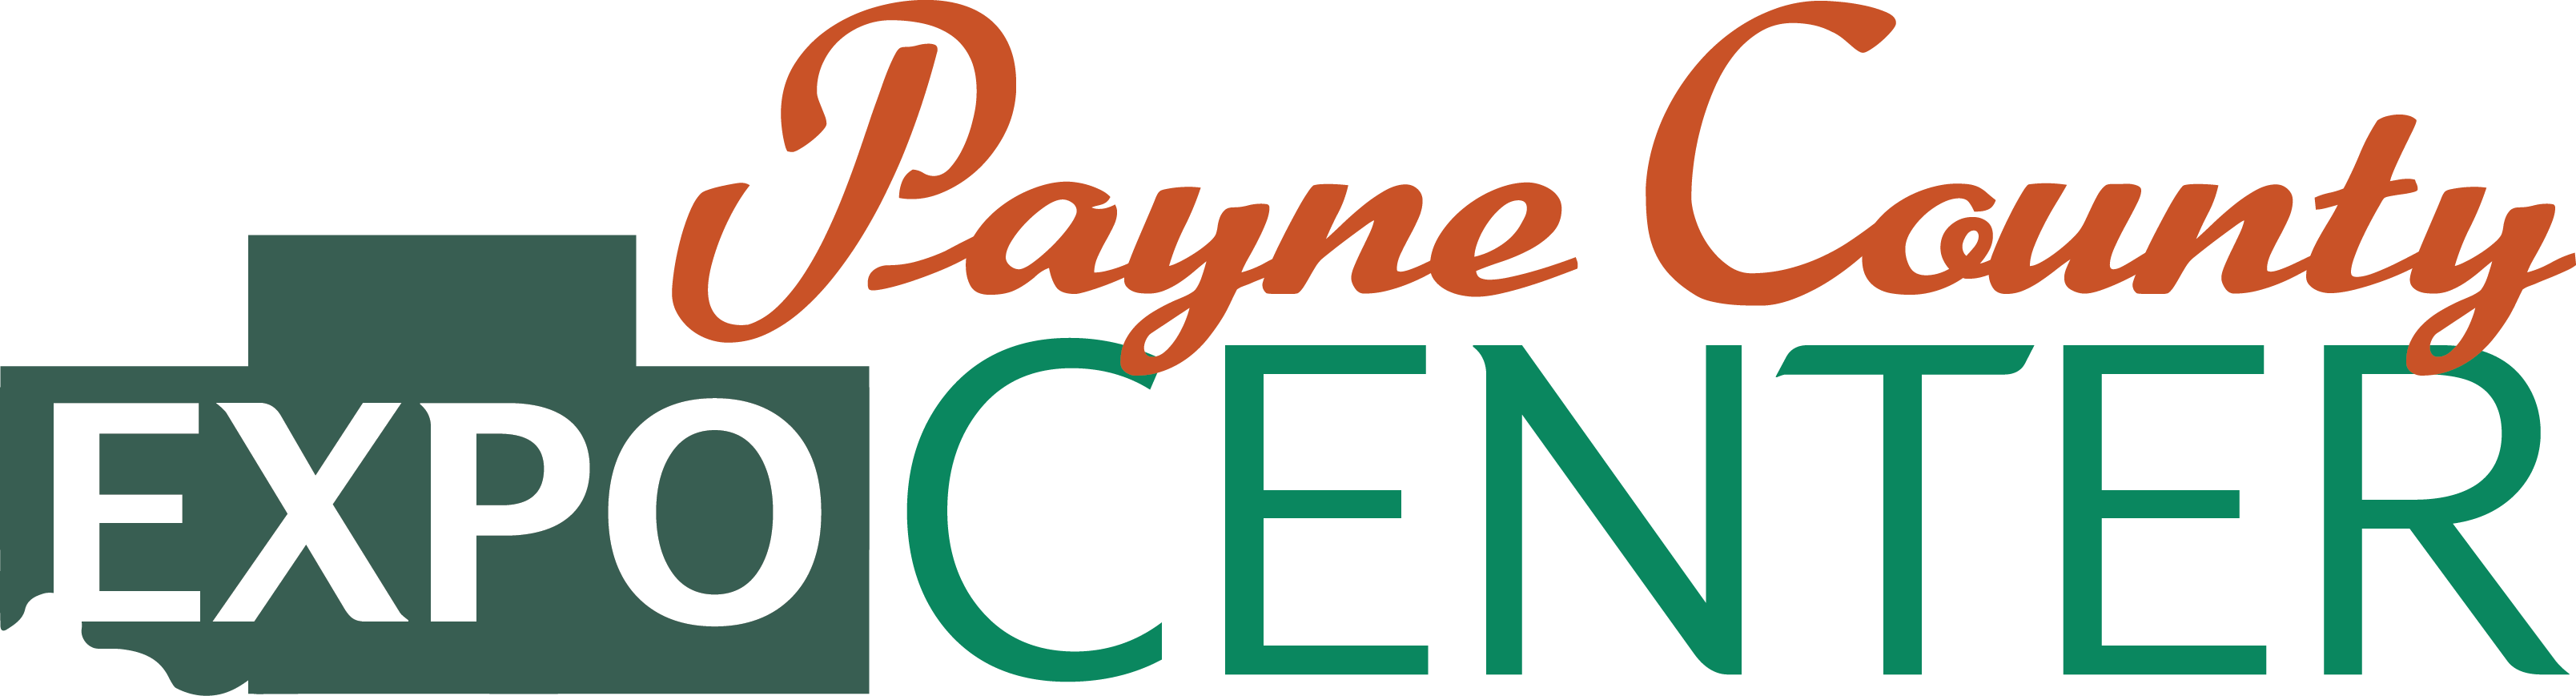 Payne County Expo Center (3217x869)